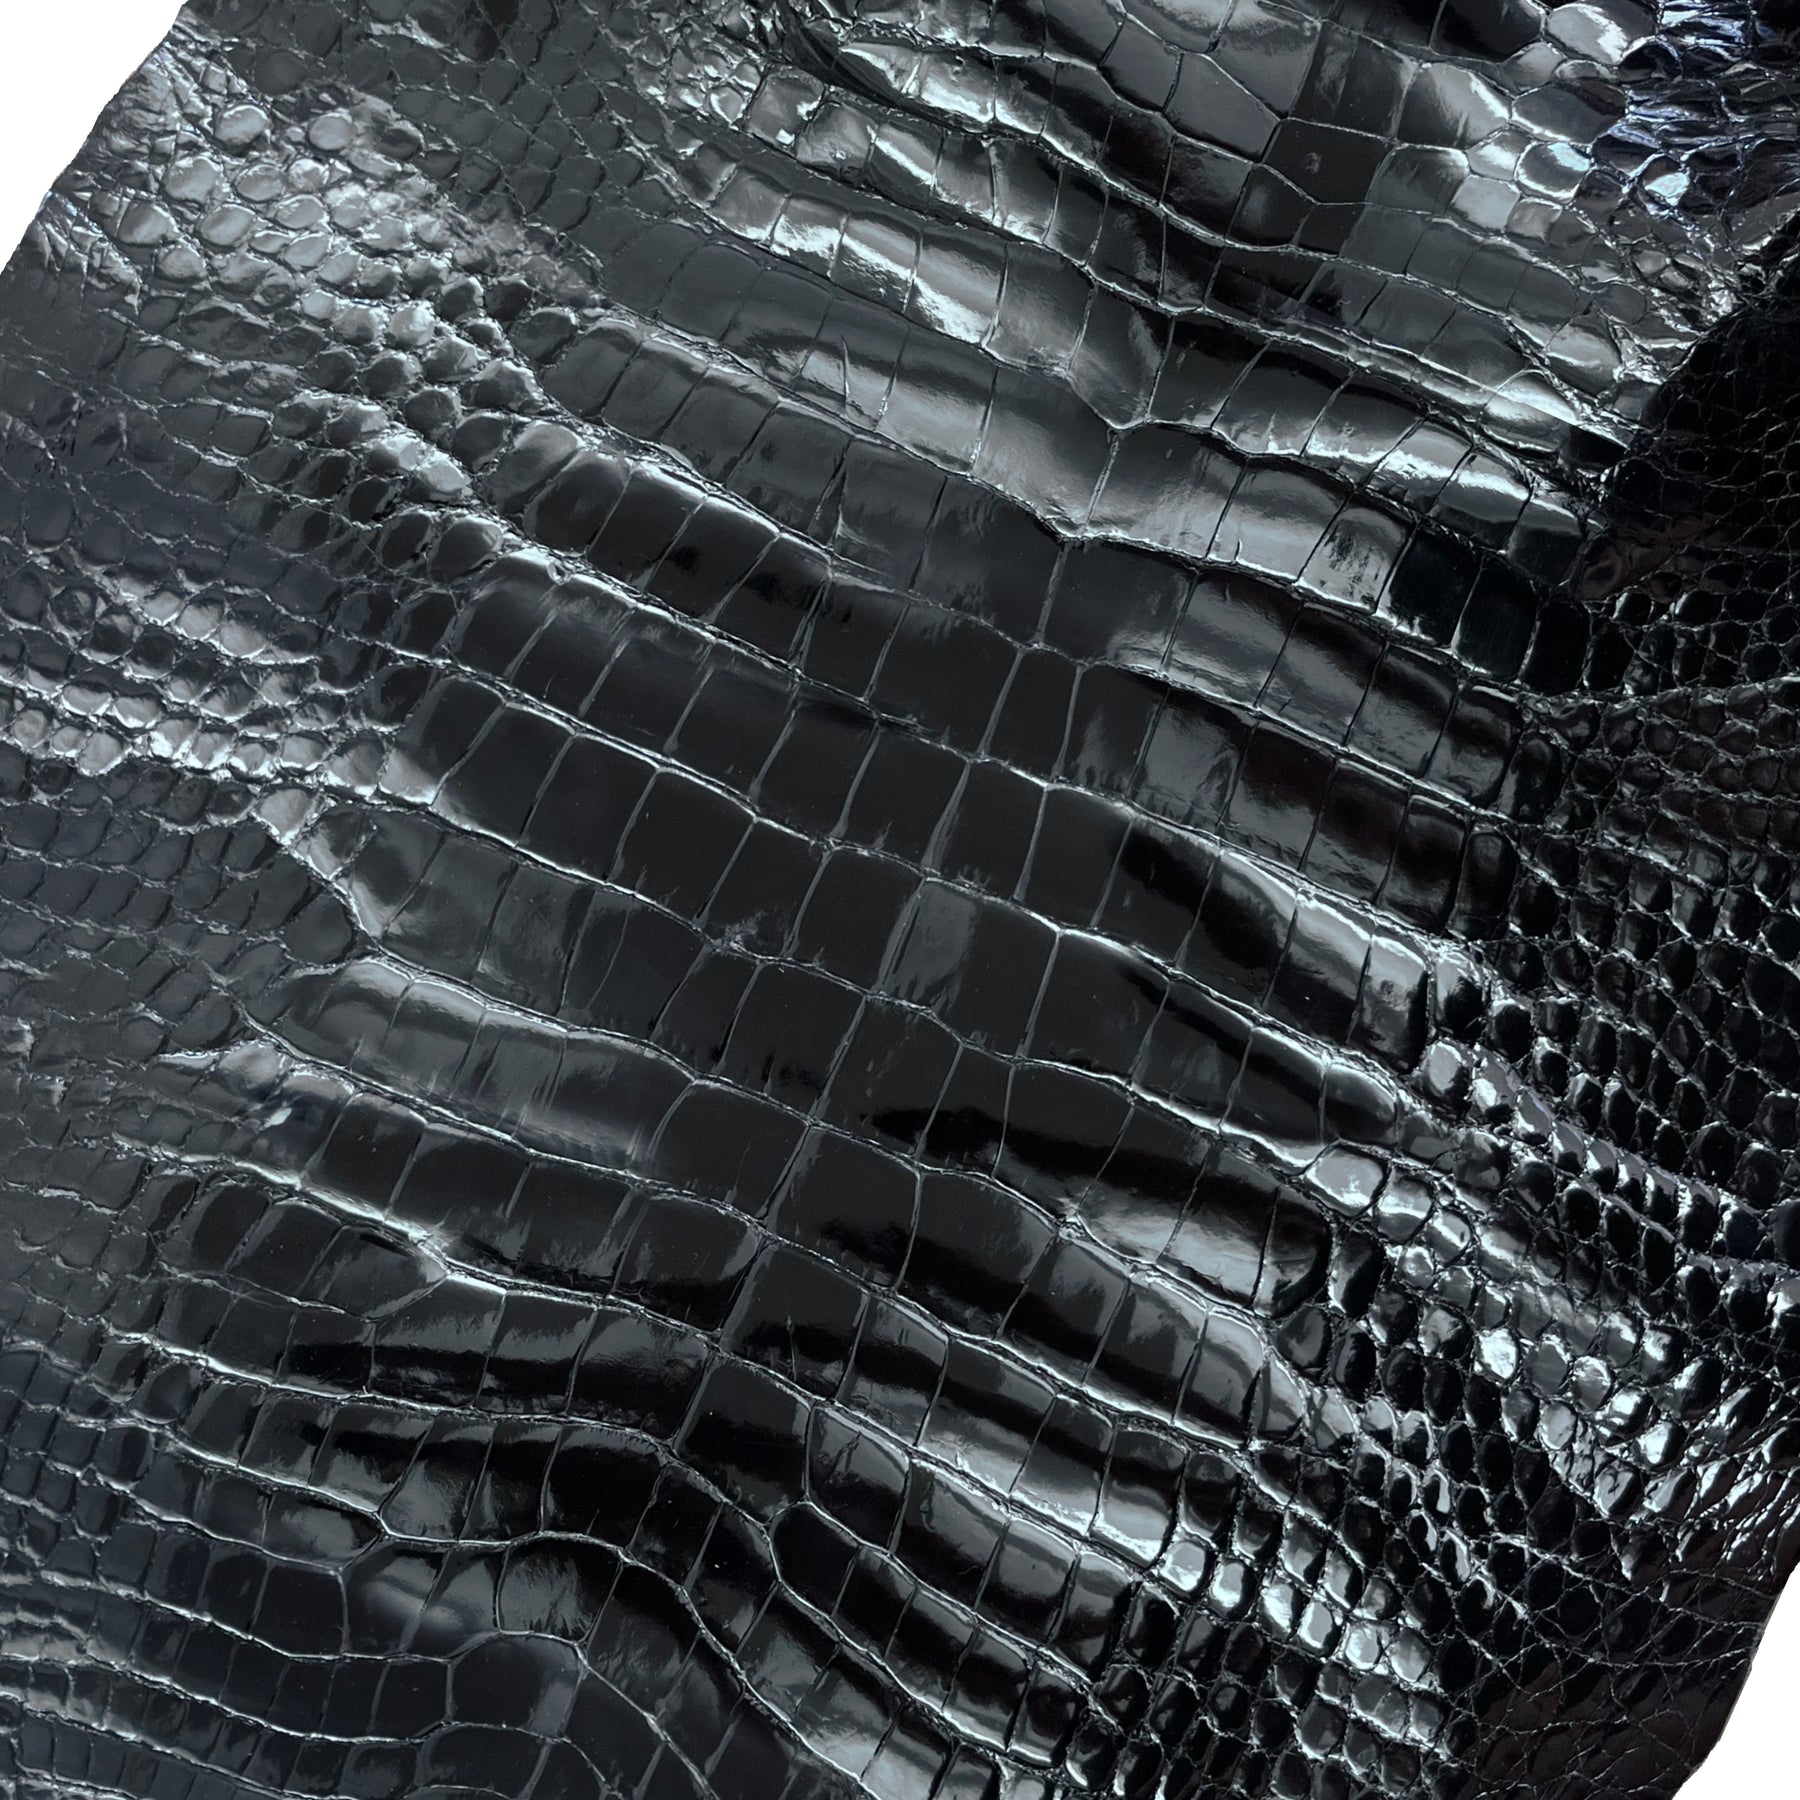 Glazed Wild American Alligator Black | 40 cm